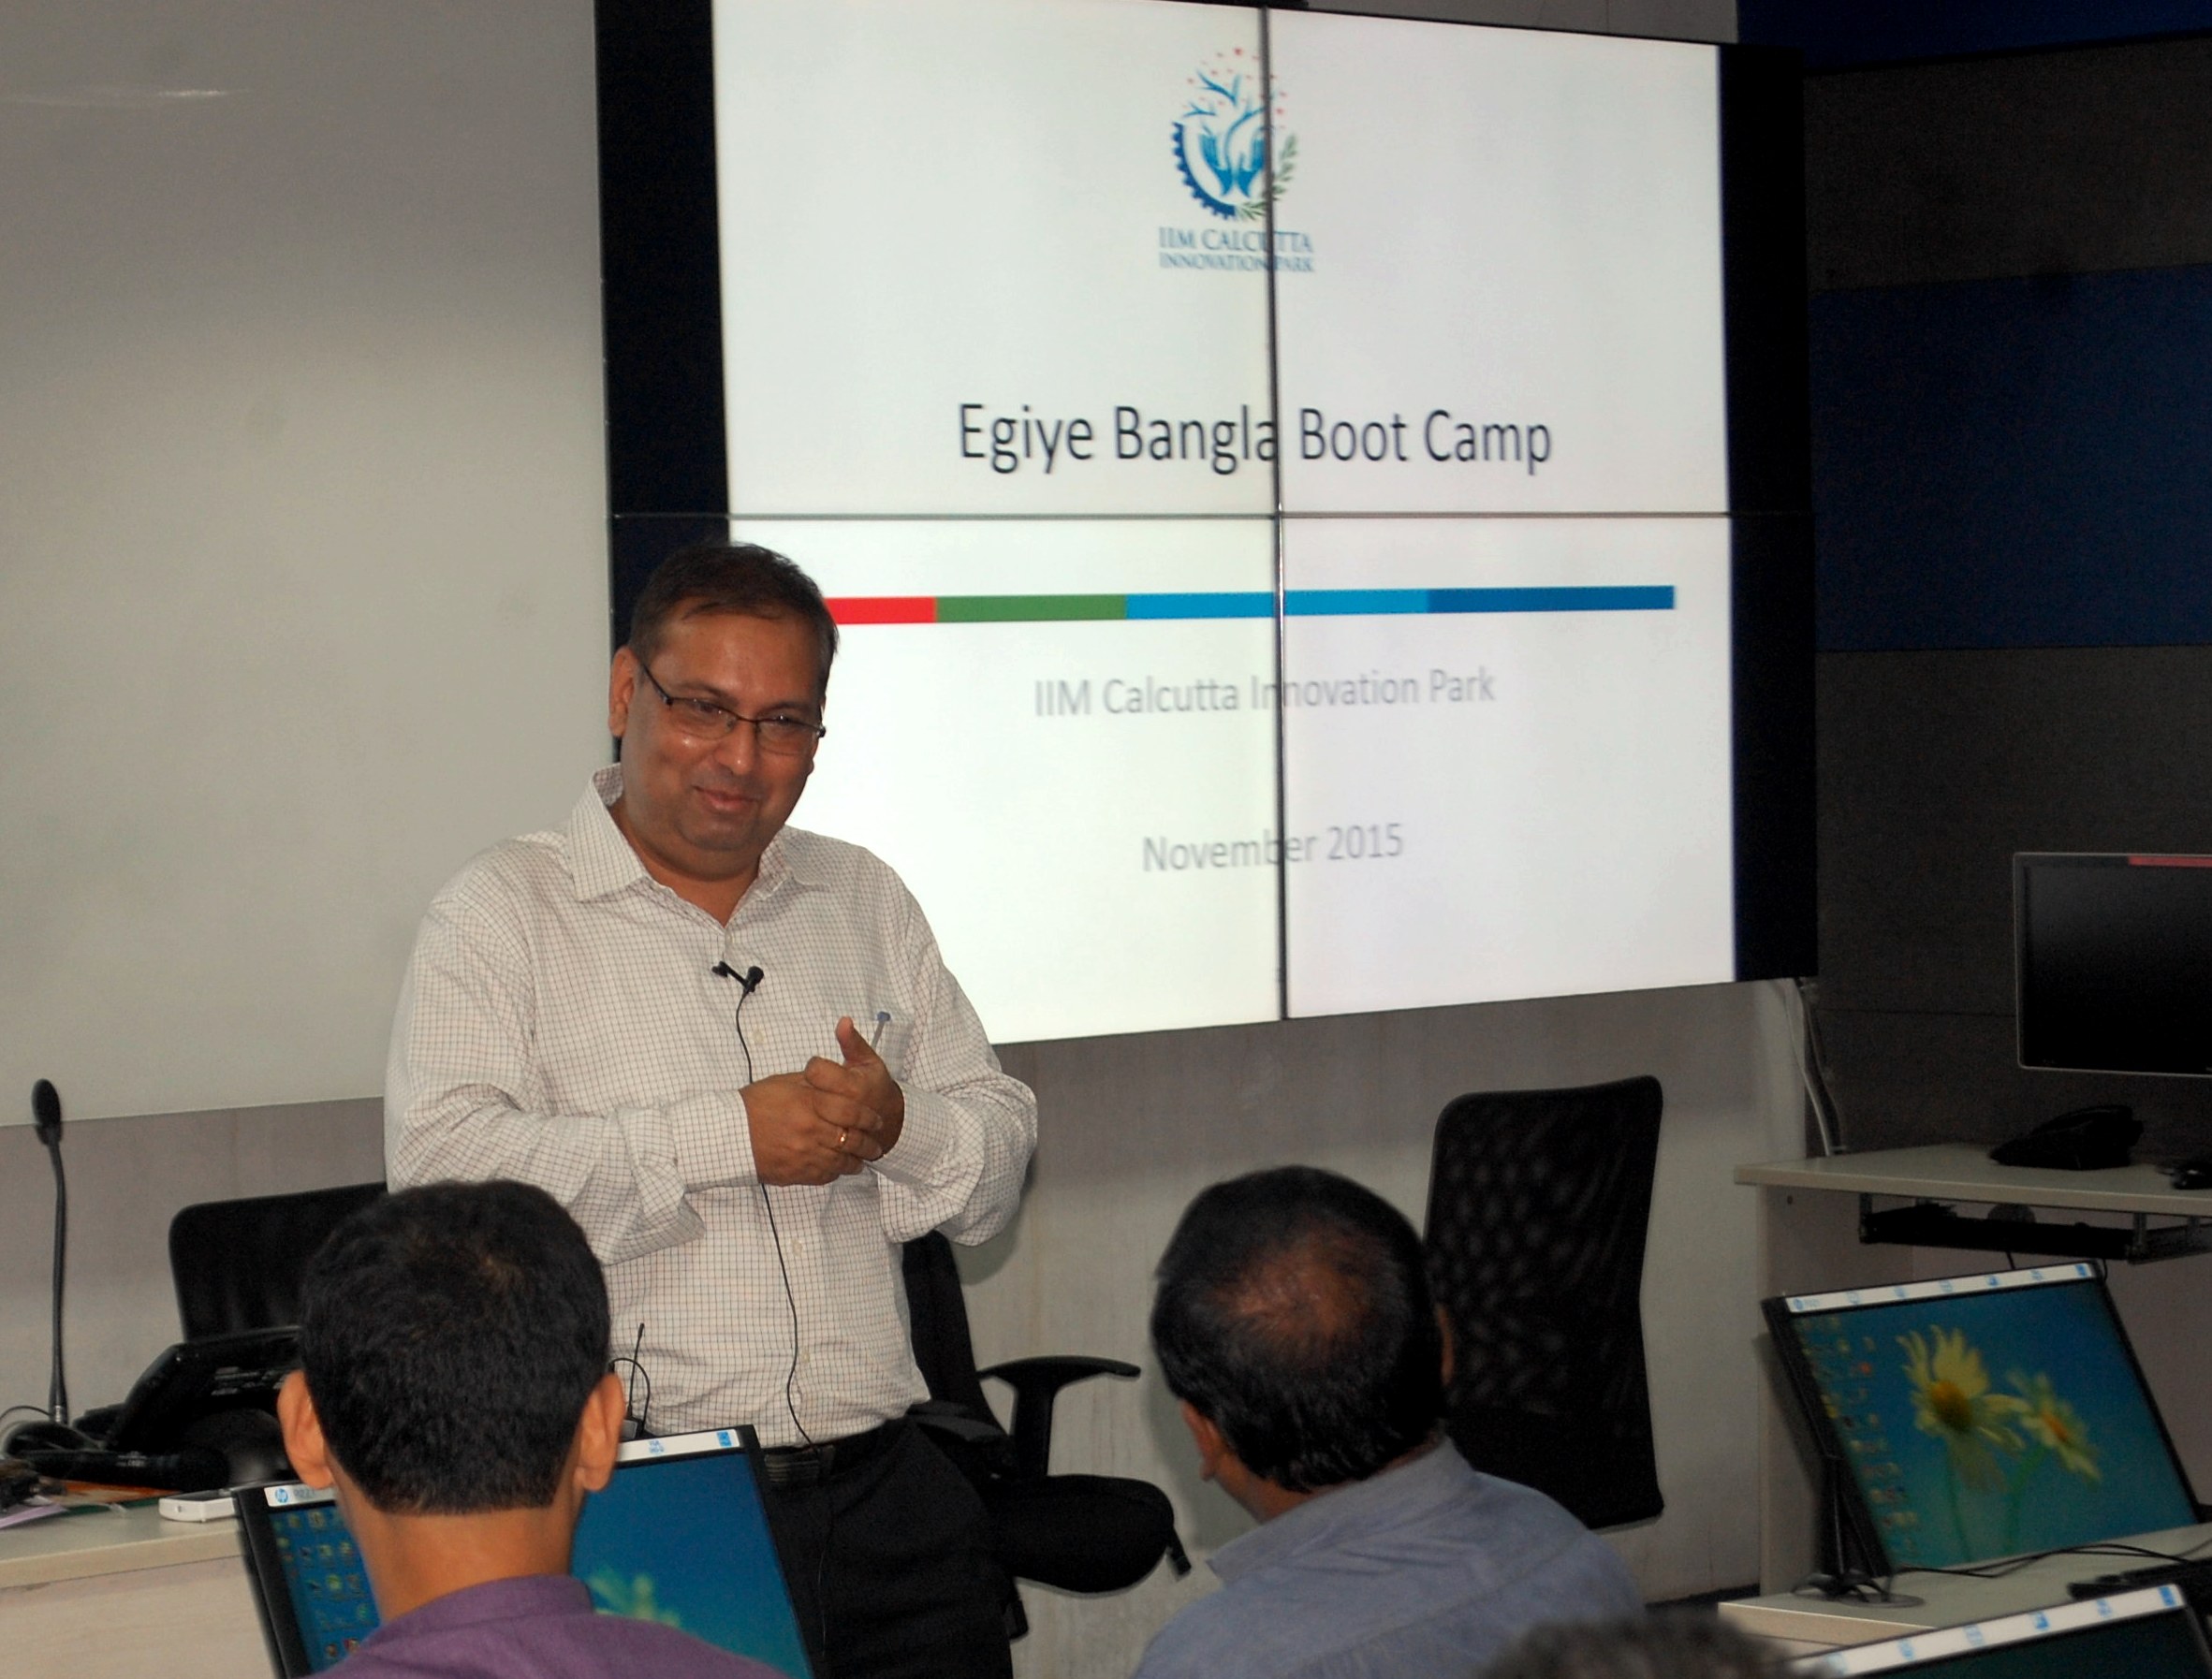 Egiye Bangla Boot Camp